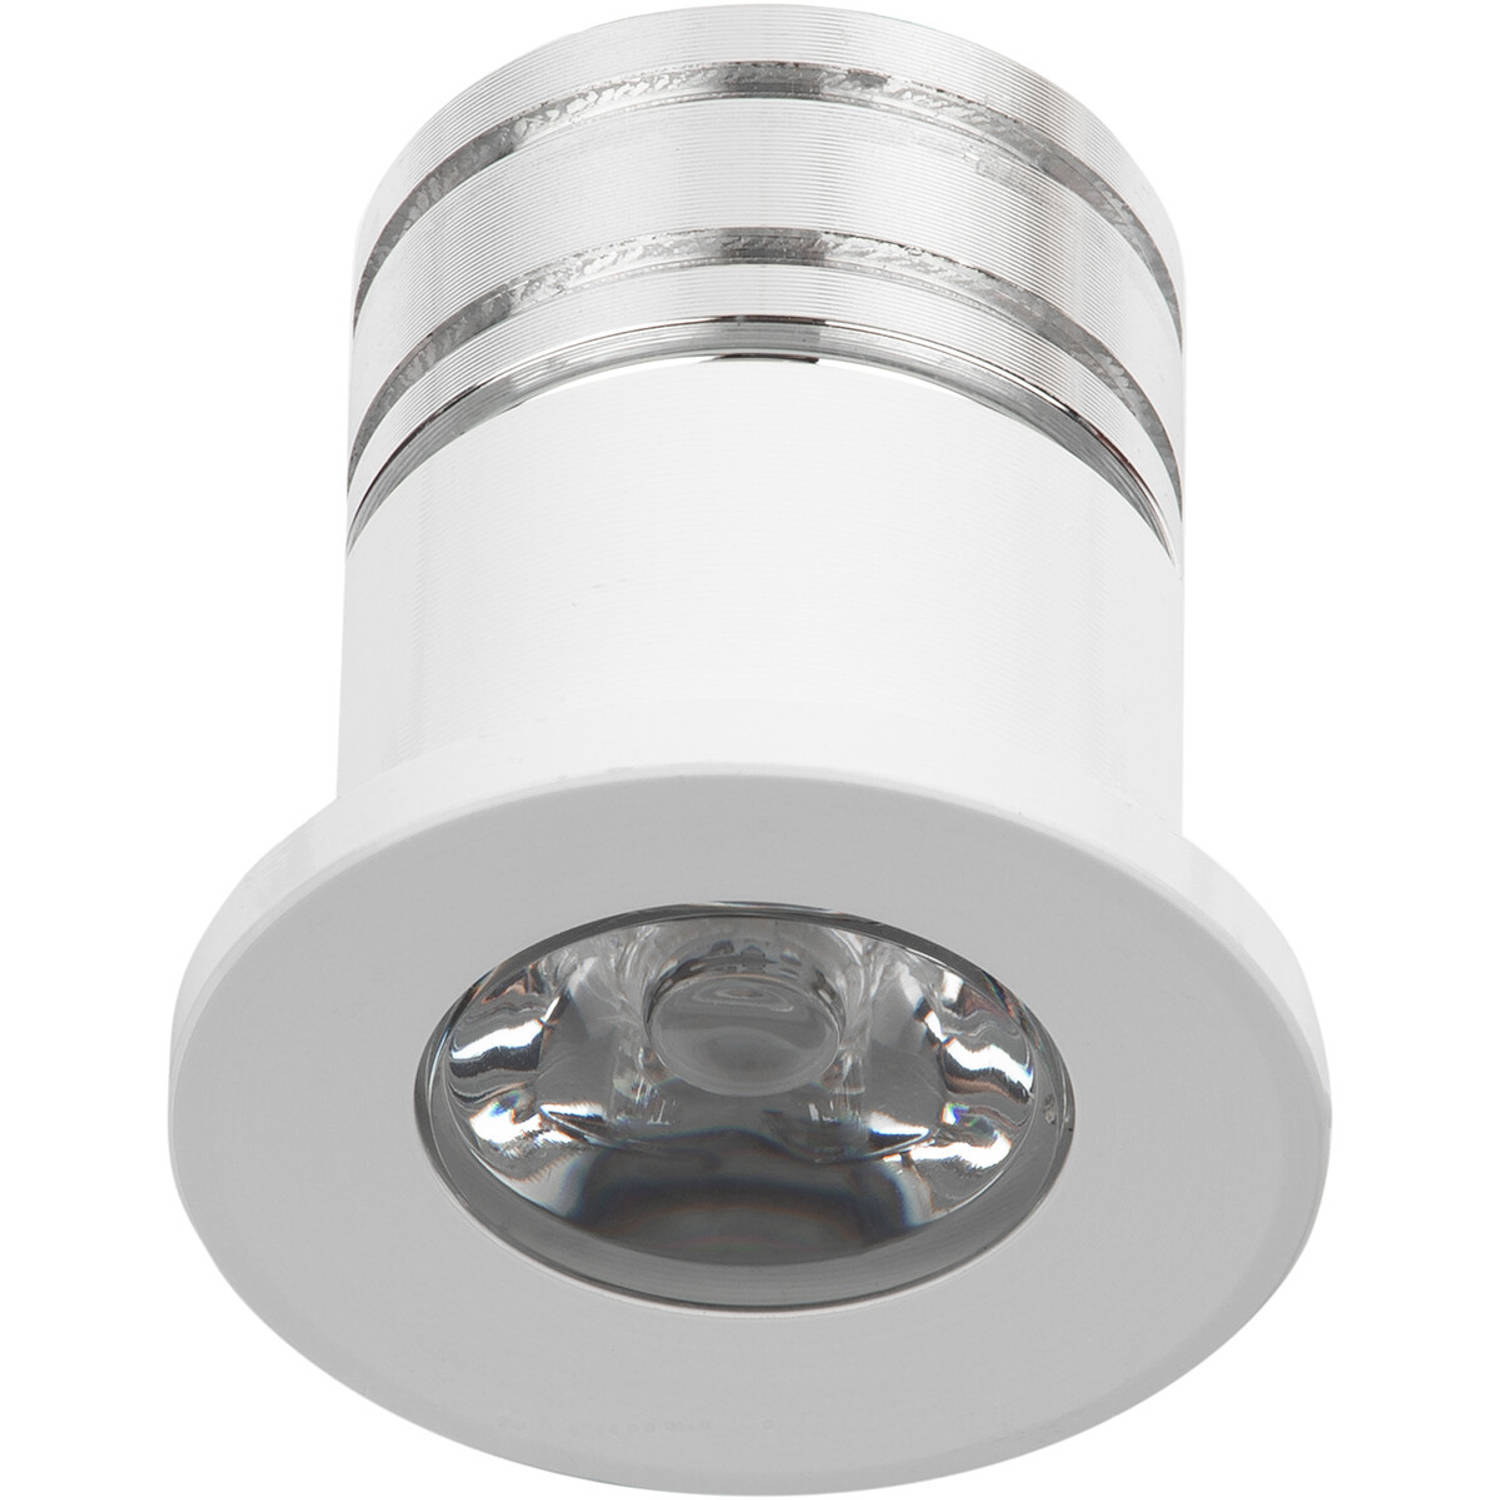 LED Veranda Spot Verlichting - Velvalux - 3W - Natuurlijk Wit 4000K - Inbouw - Rond - Mat Wit - Aluminium - Ø31mm